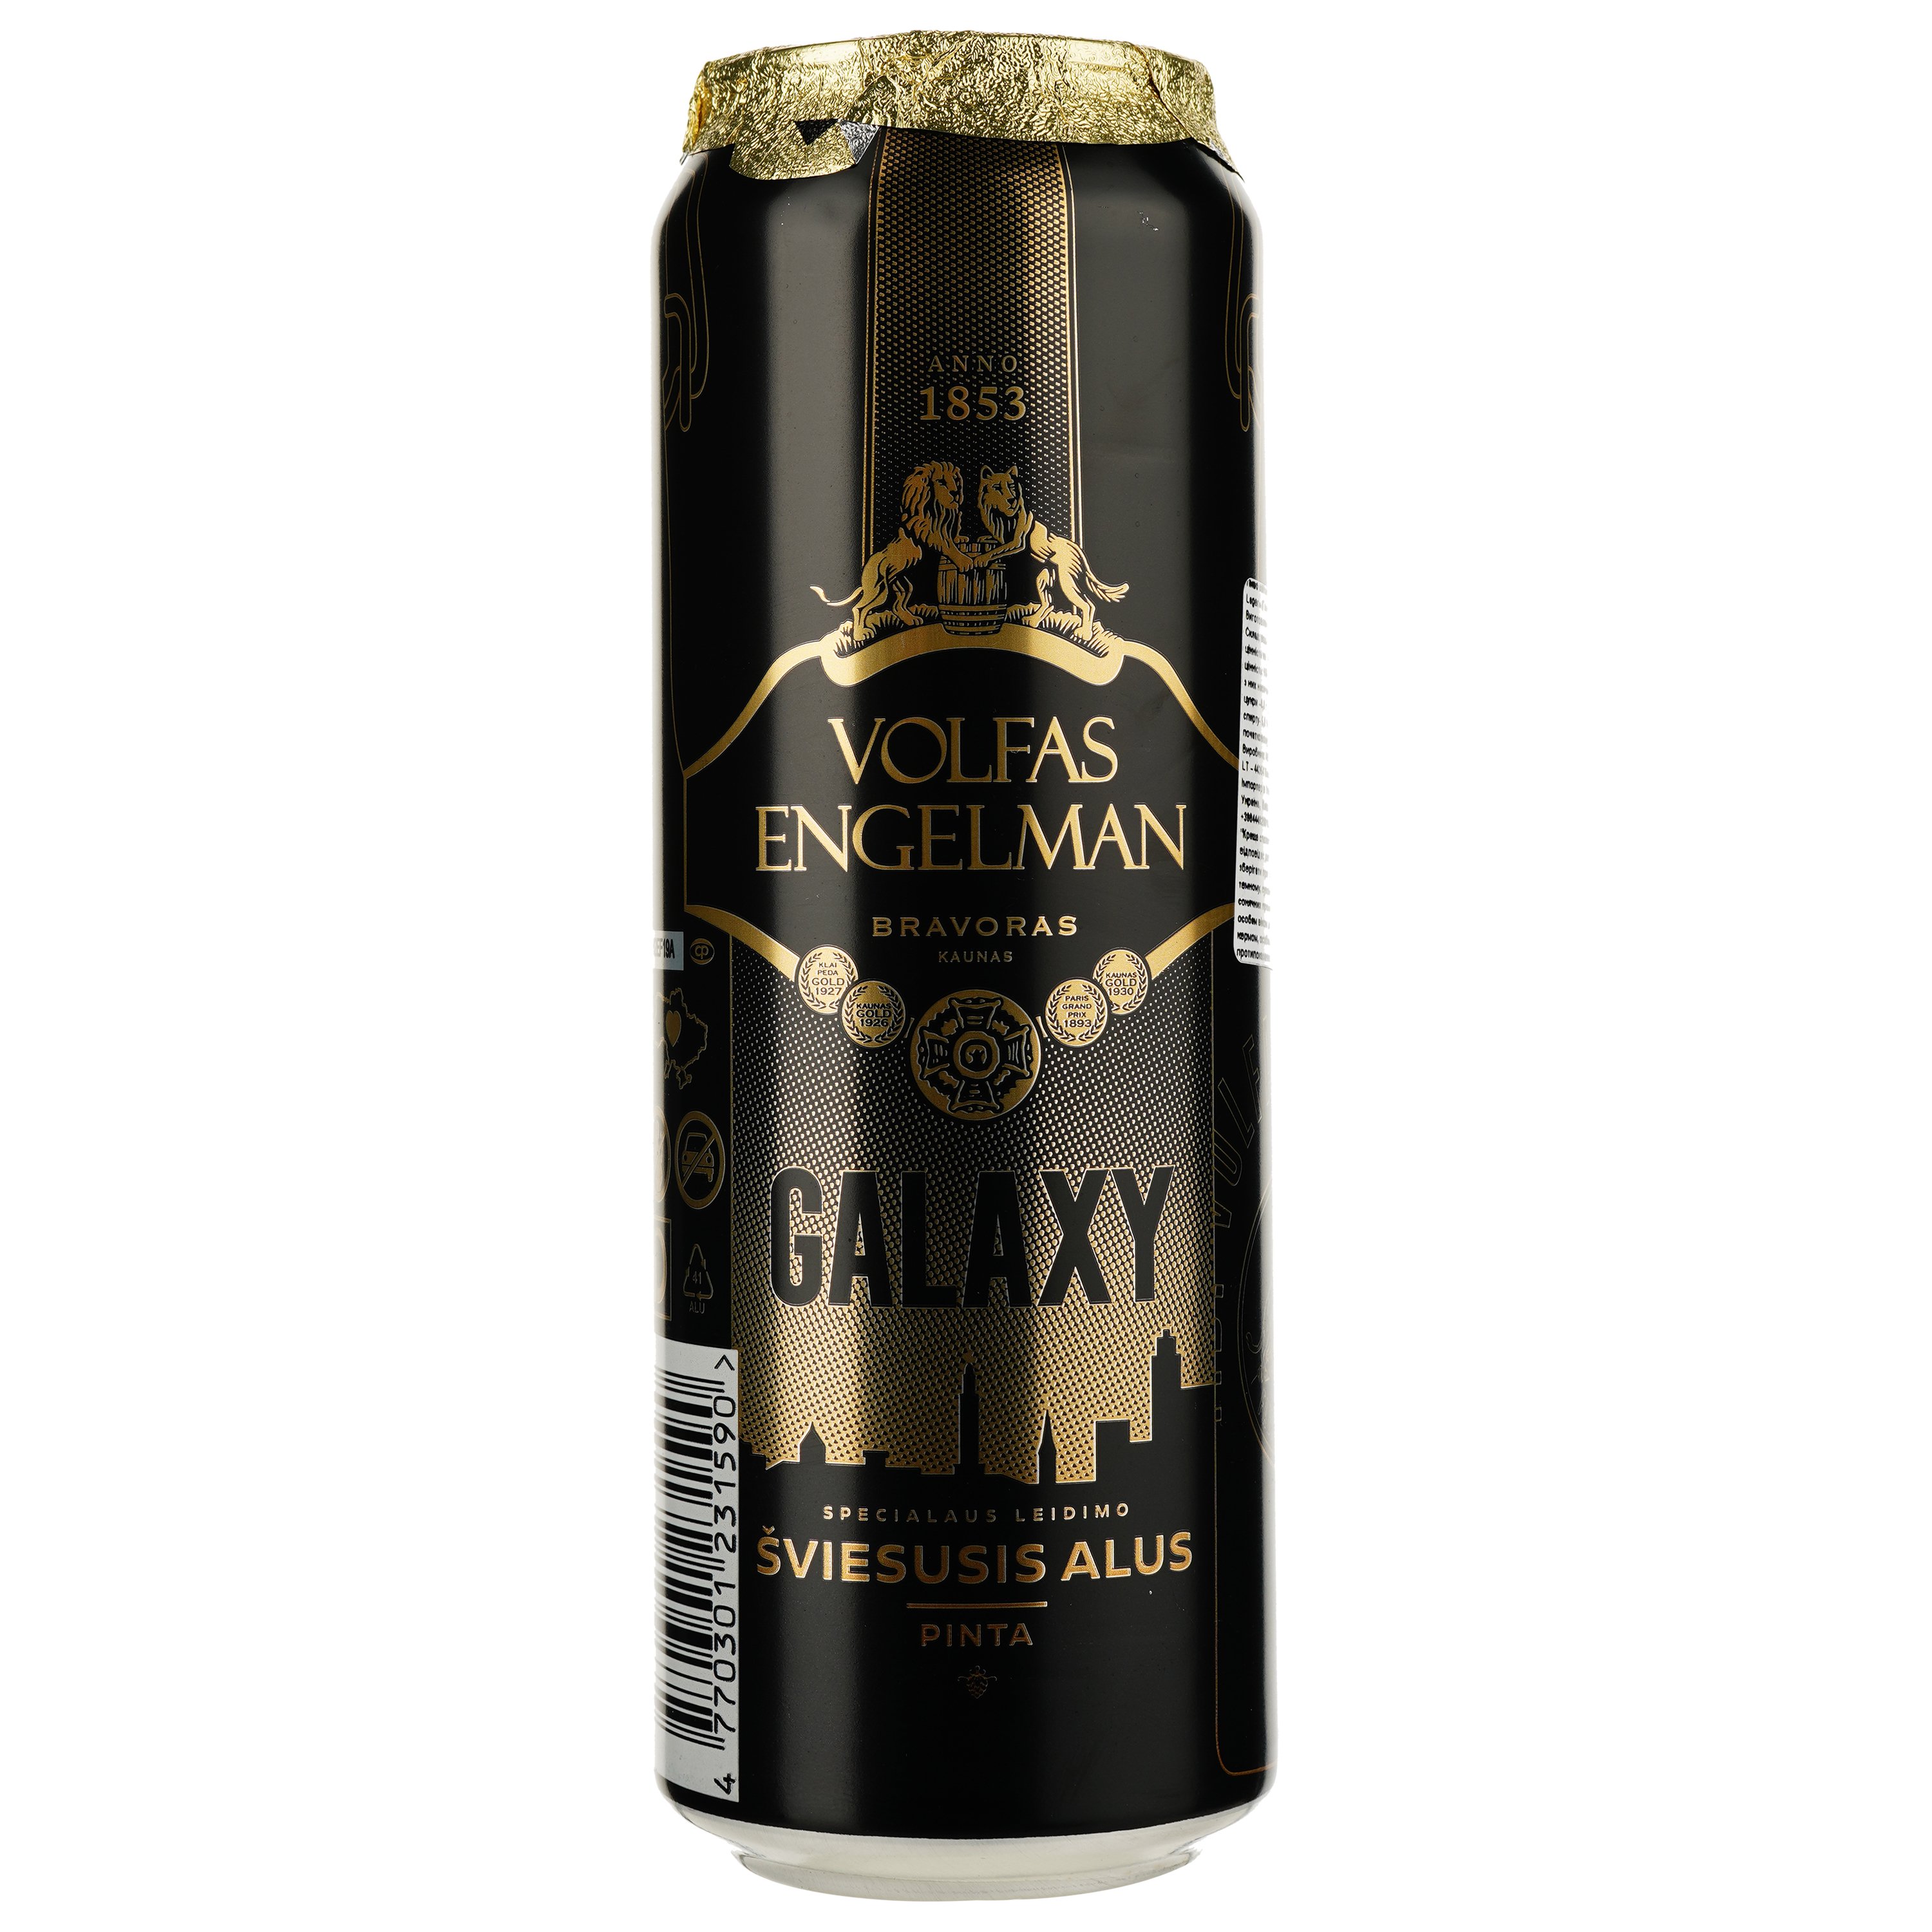 Пиво Volfas Engelman Galaxy Lager светлое 5% 0.568 л ж/б - фото 1